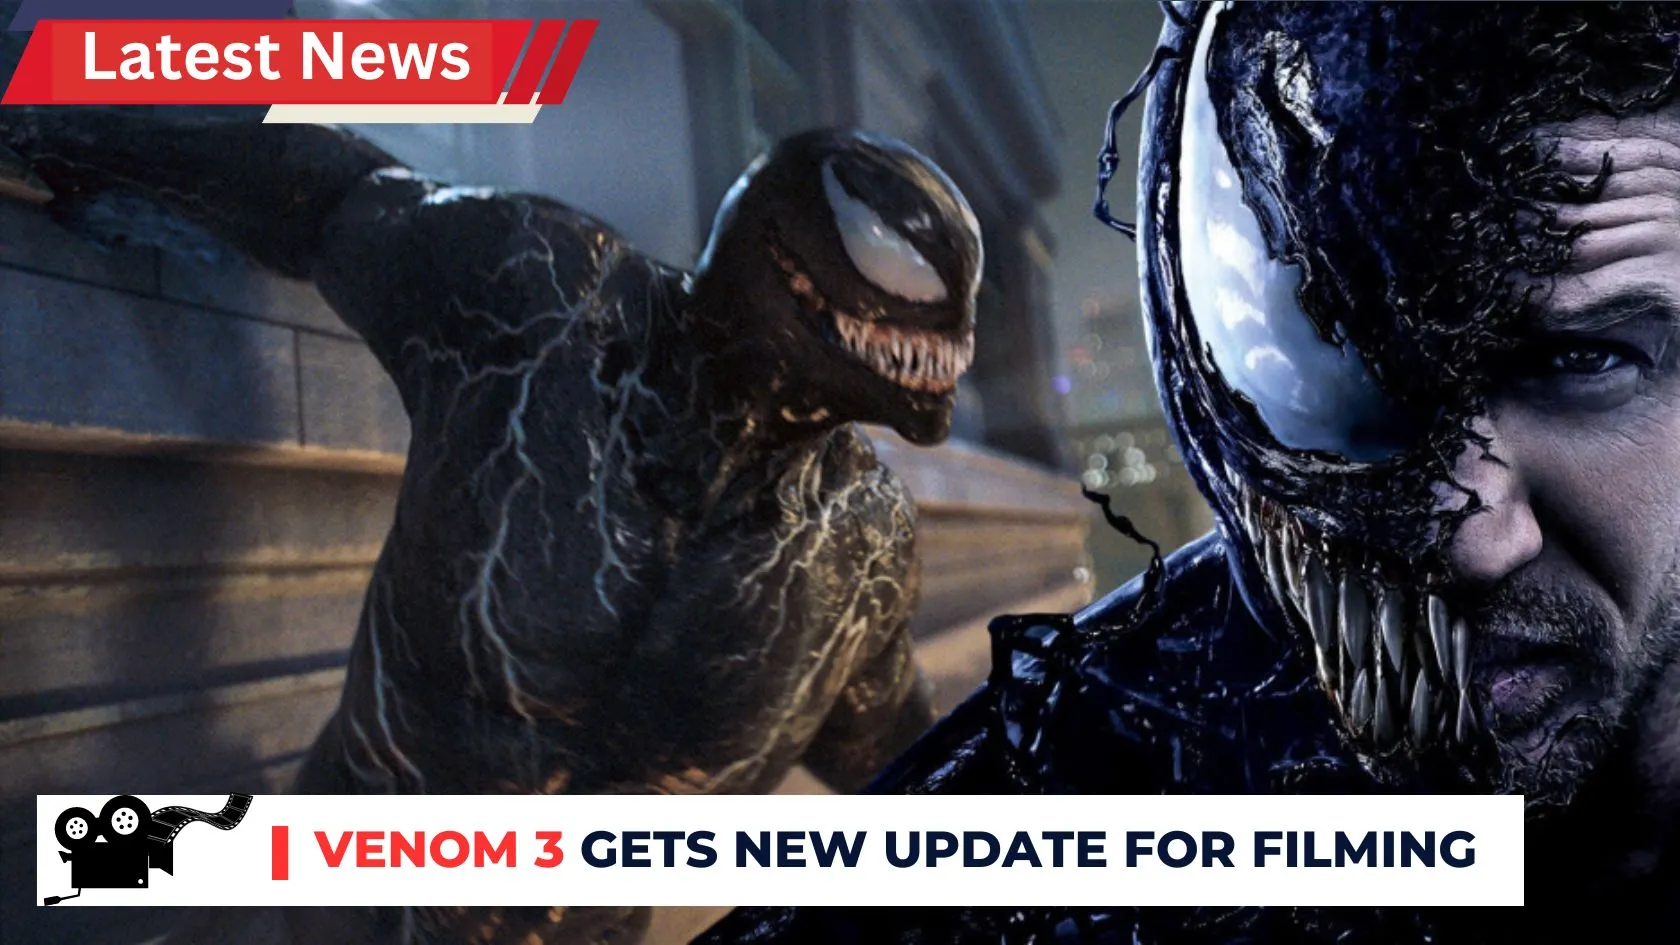 Venom 3 Gets New Update for Filming